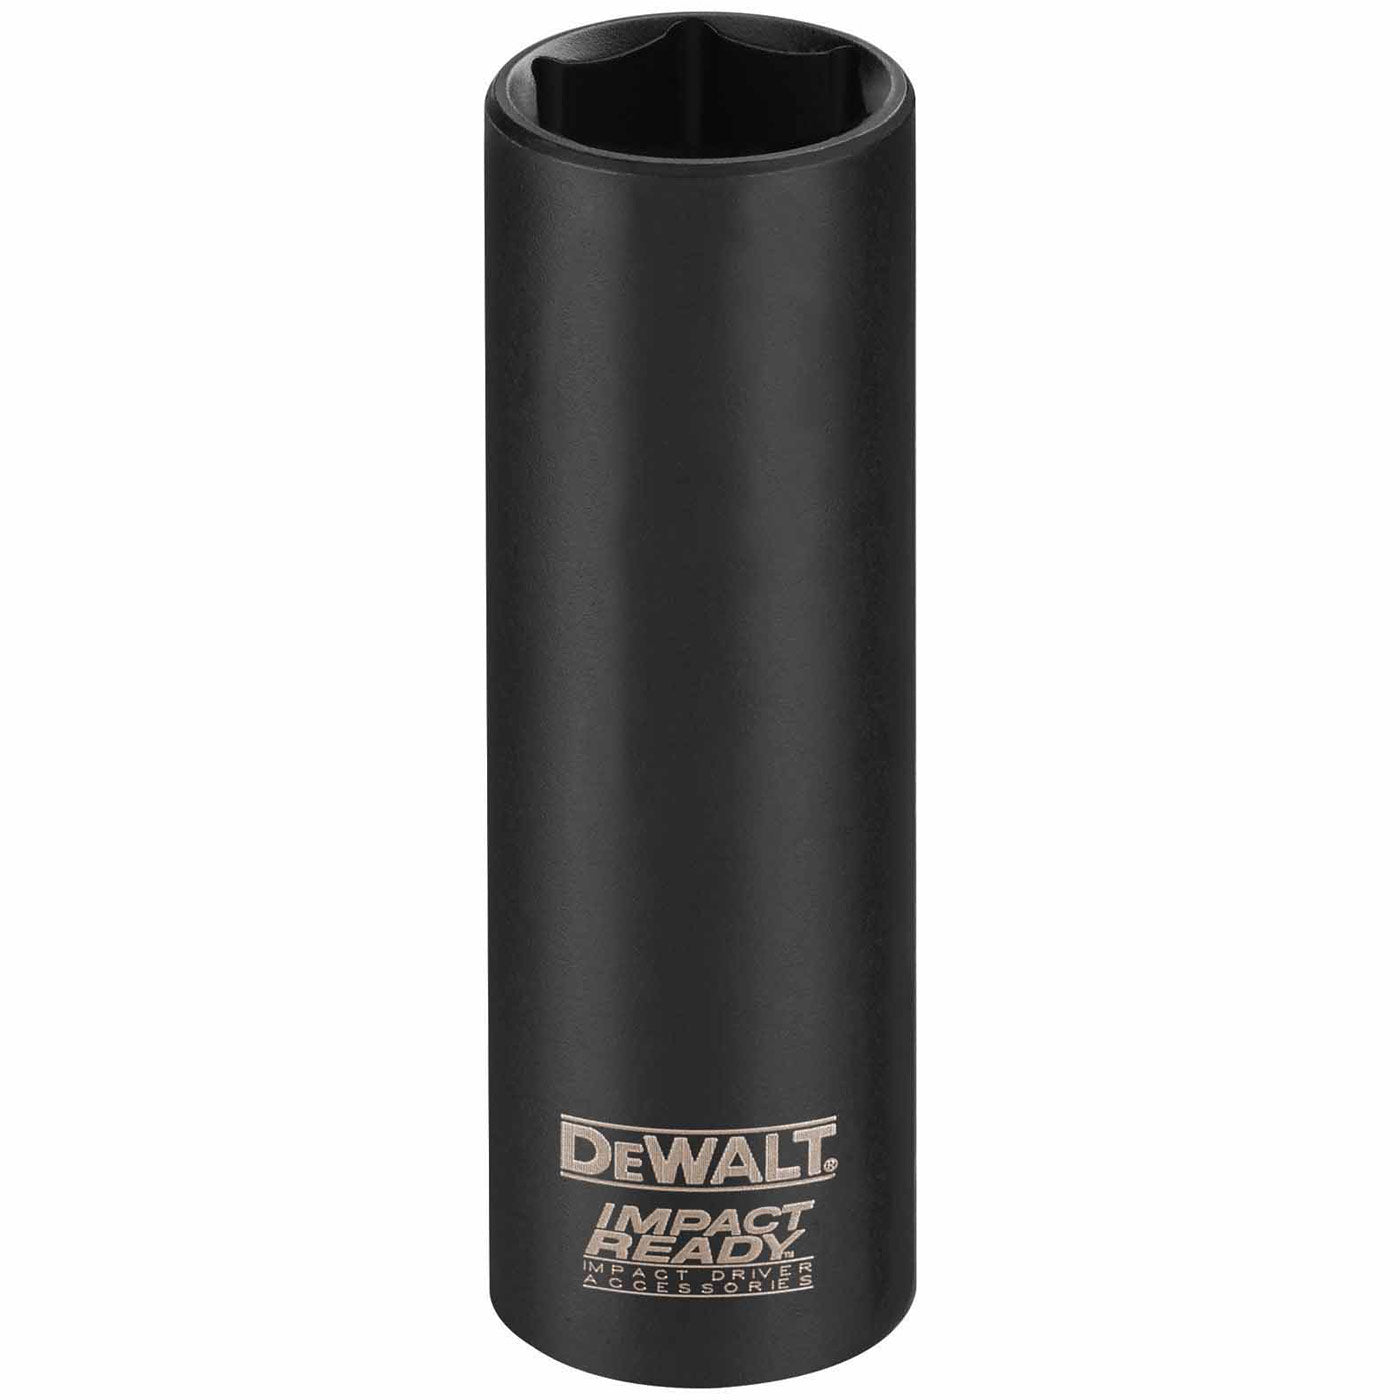 DeWalt DW22882 5/8" Deep Pocket Impact Ready Socket 1/2"